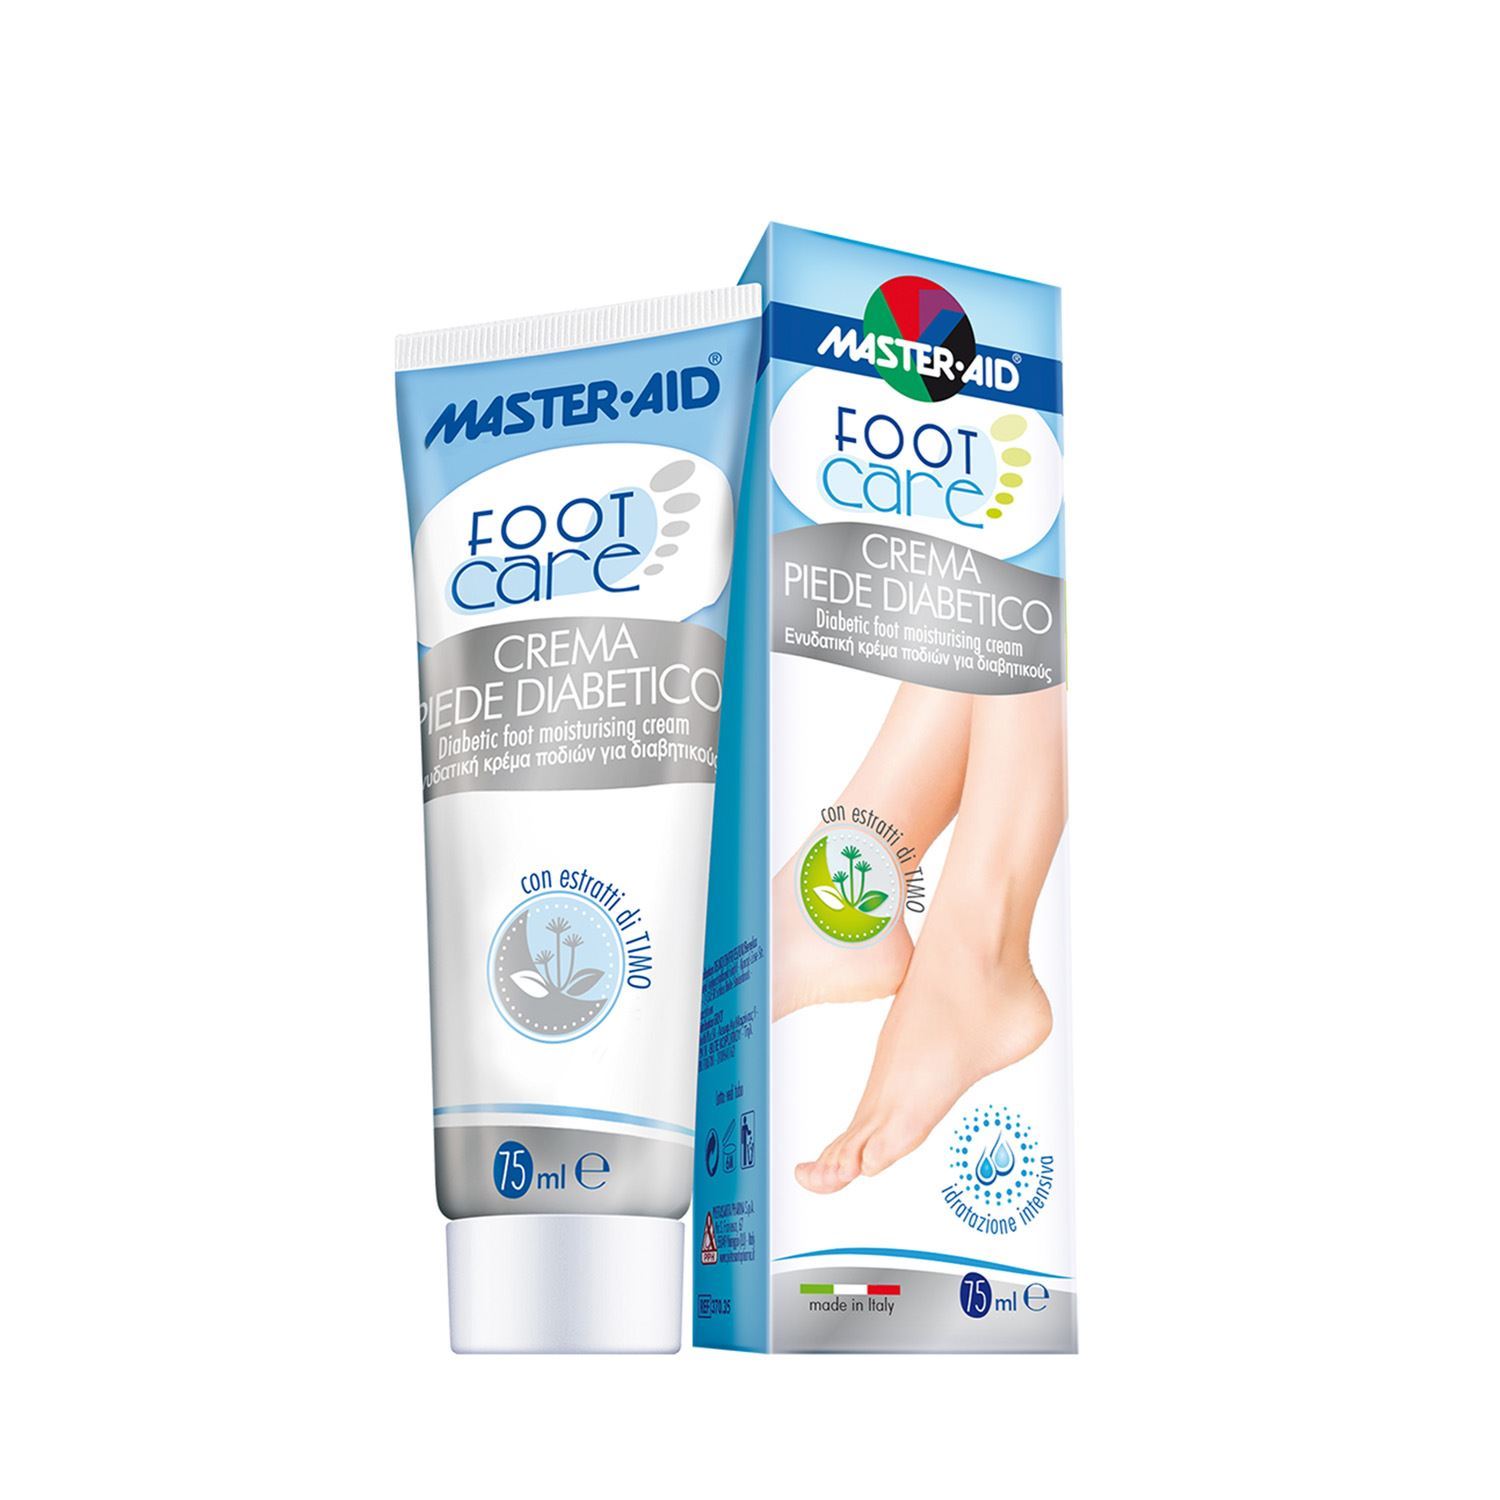 Master-Aid(R) Foot Care Crema Piede Diabetico 75ml